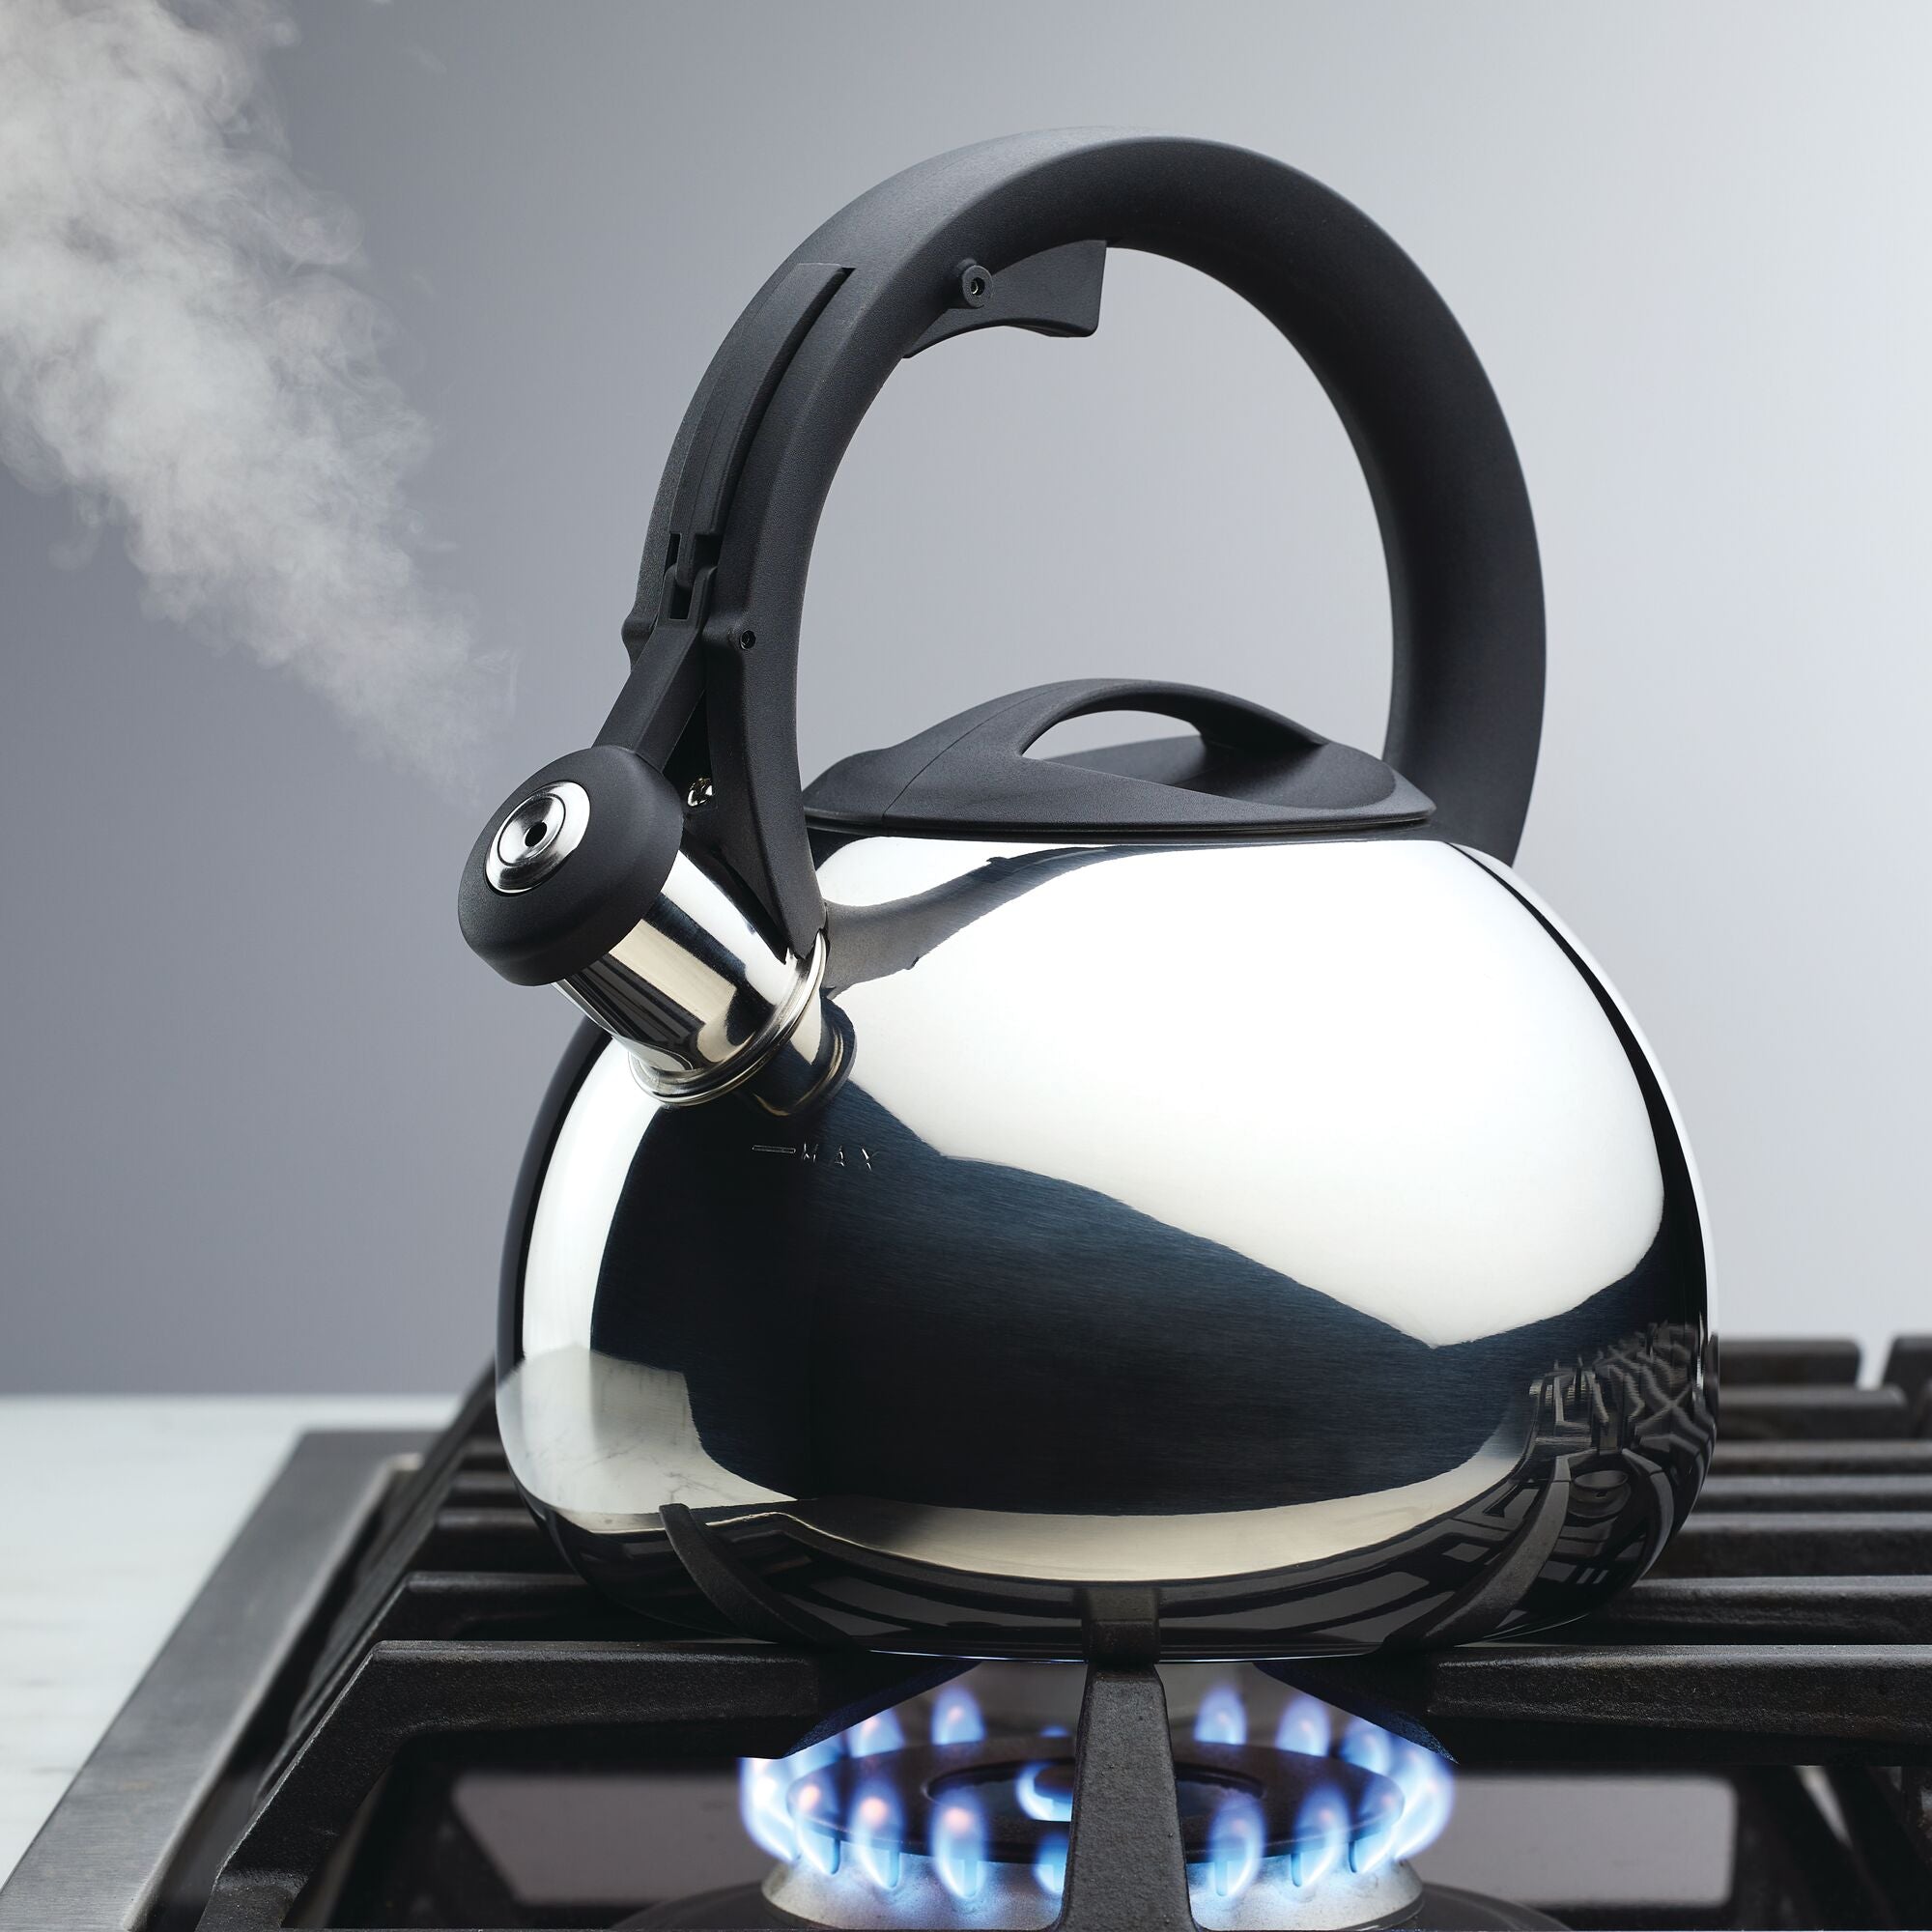 Farberware electric kettle review 